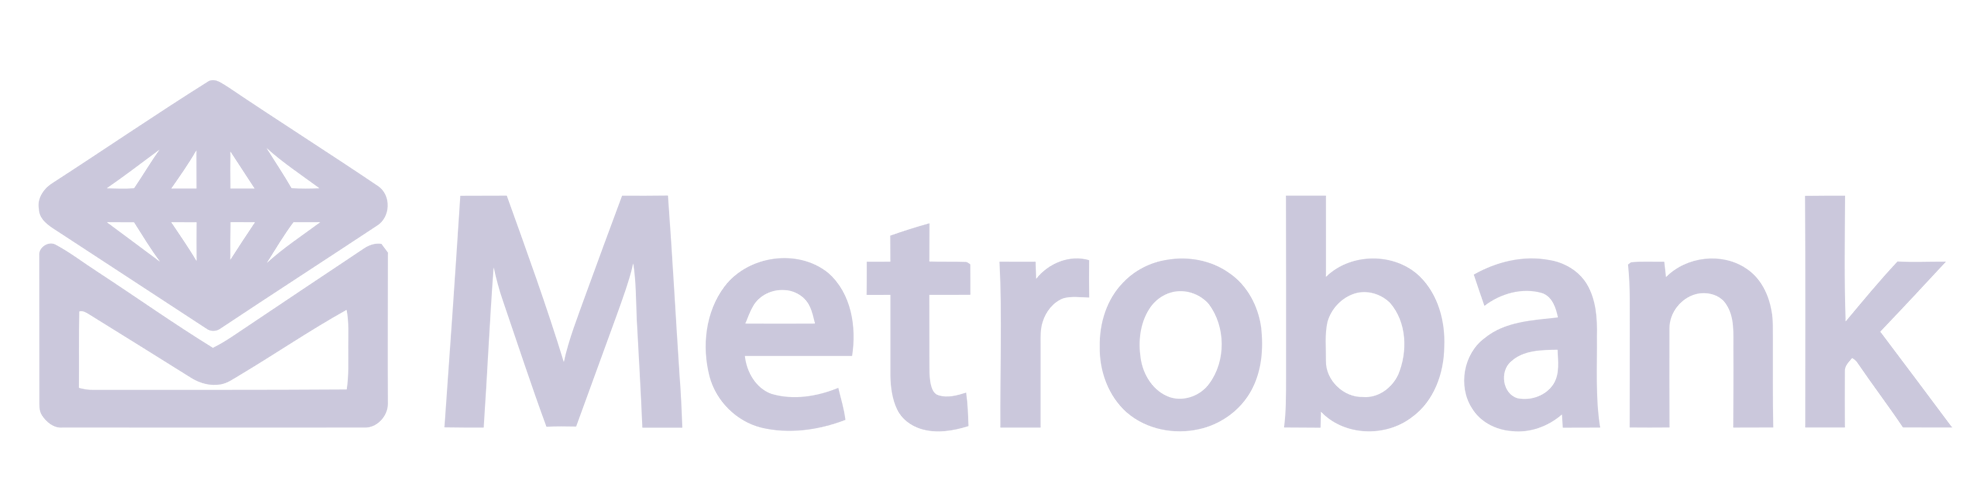 MetroBank trusts Uptime.com for performance web monitoring